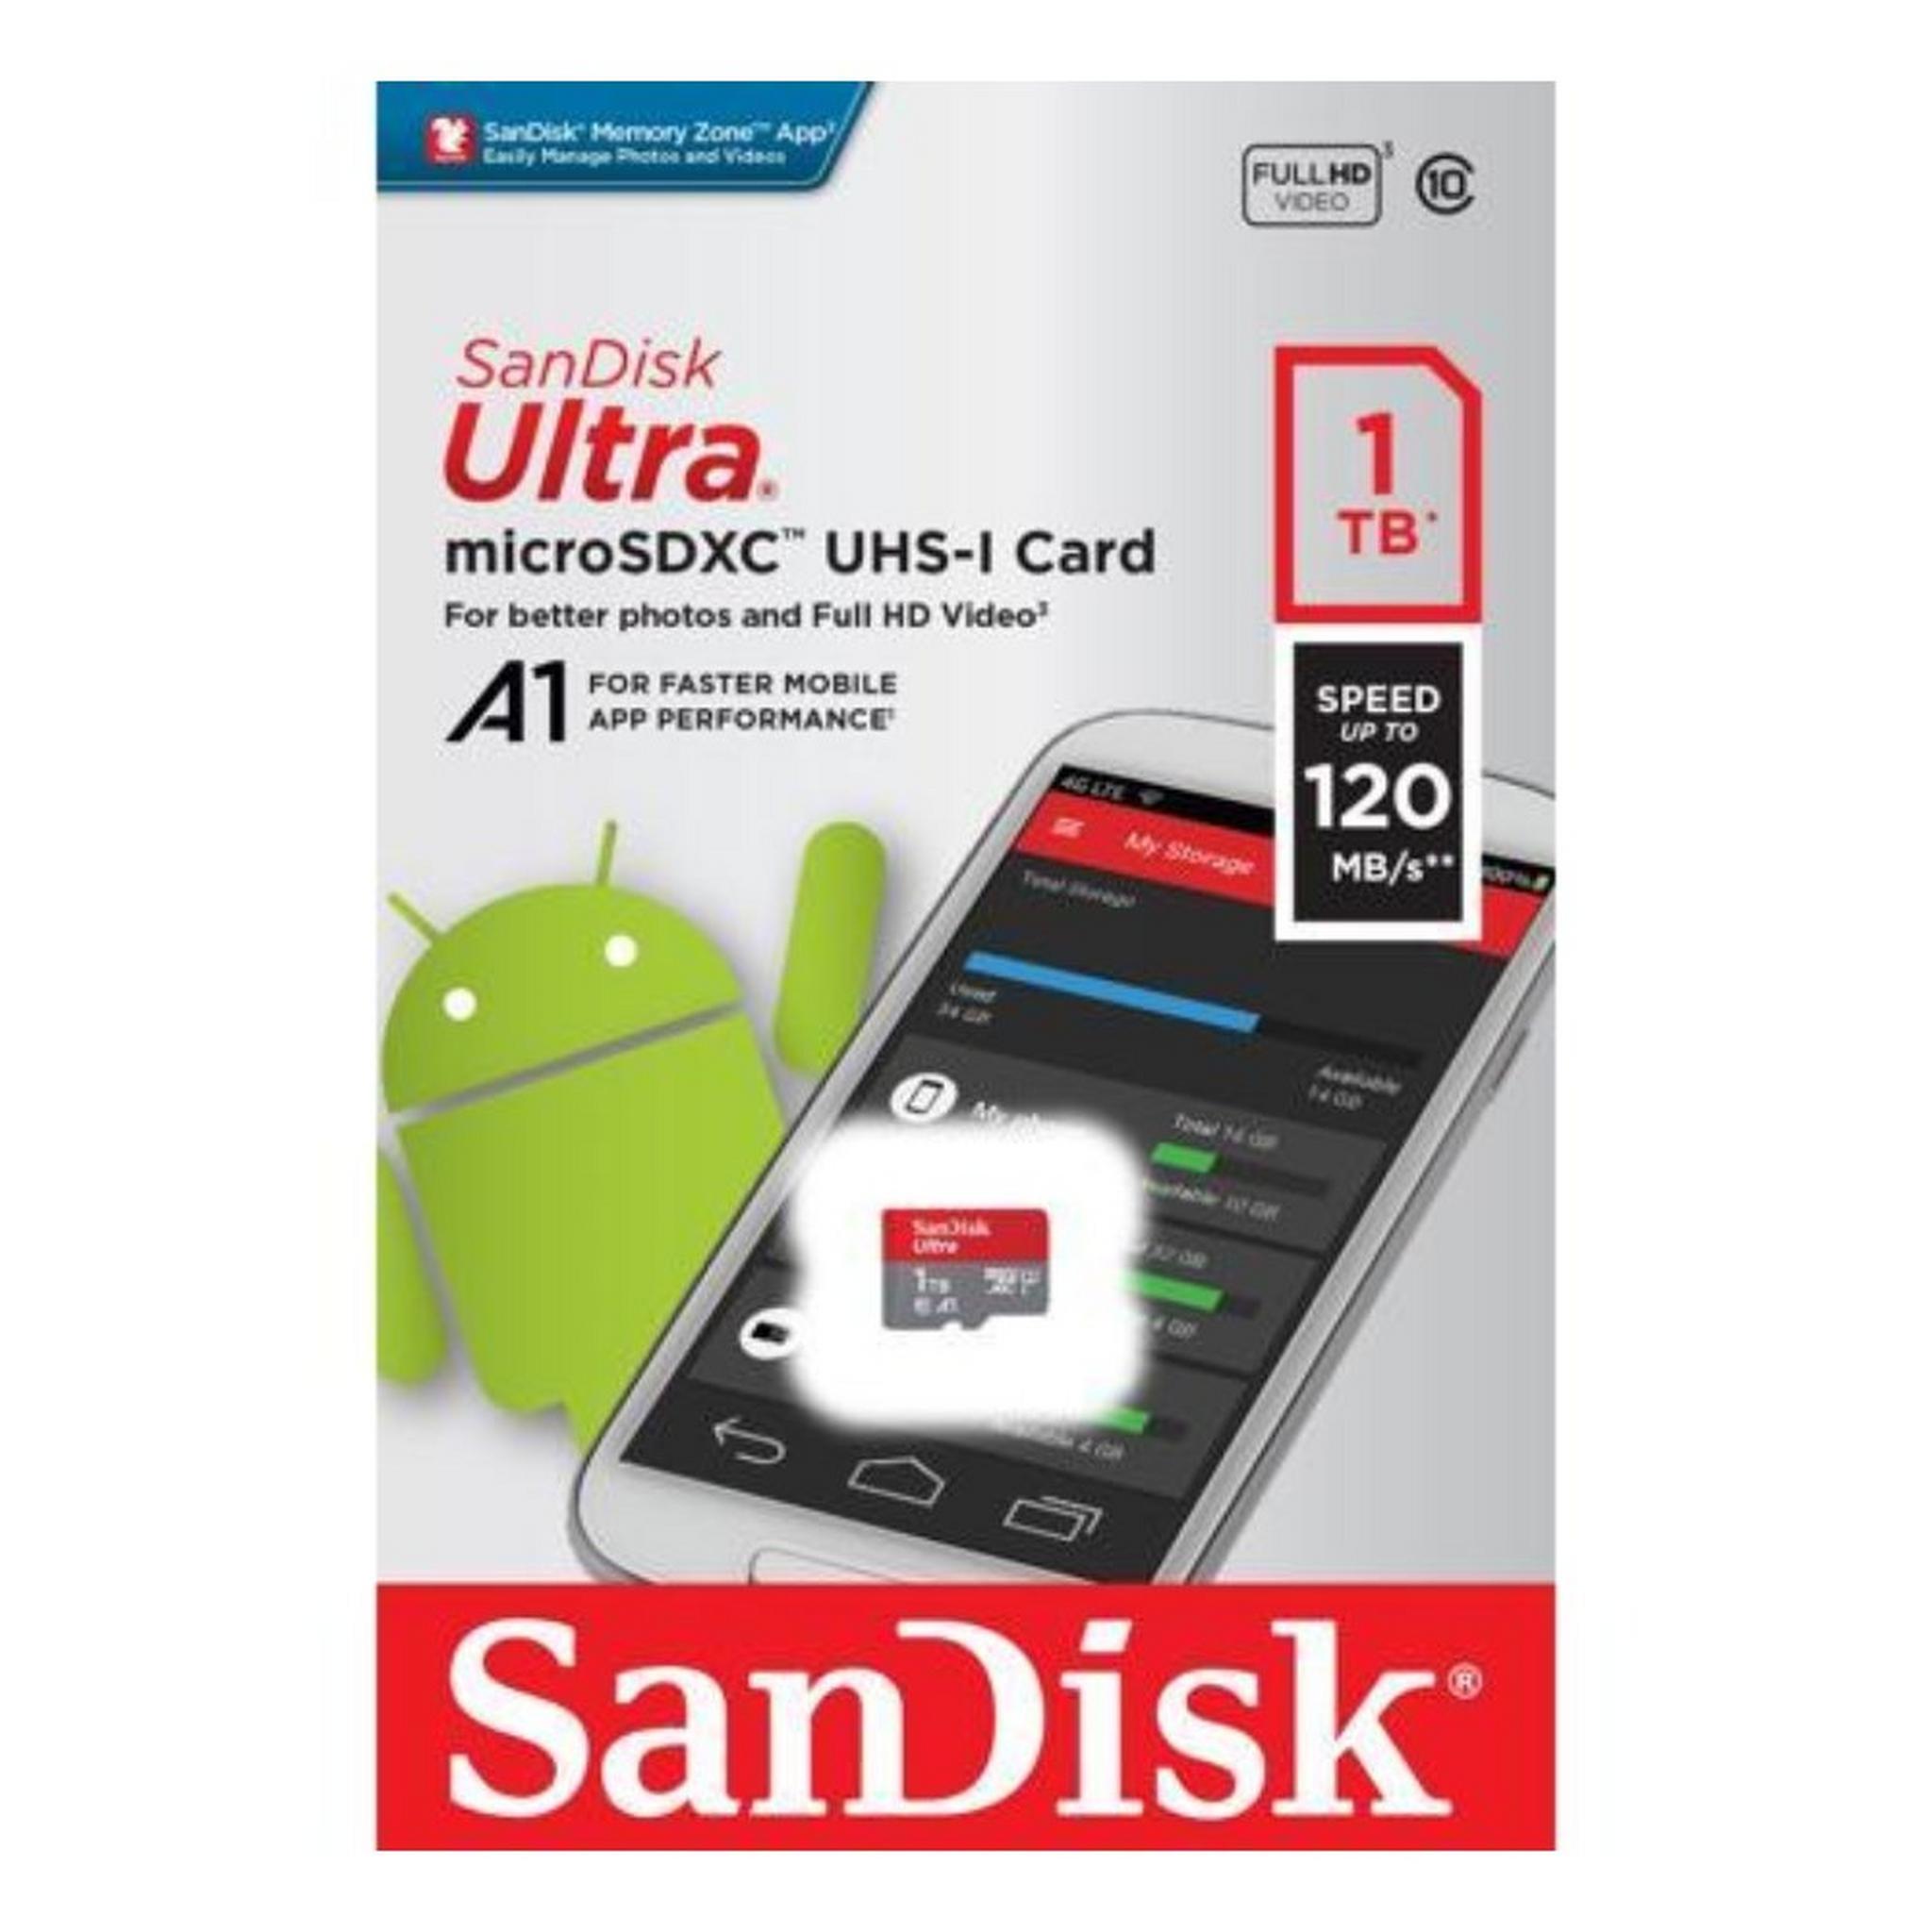 SanDisk Ultra MicroSDXC 1TB UHS-I 120MB/S Memory Card